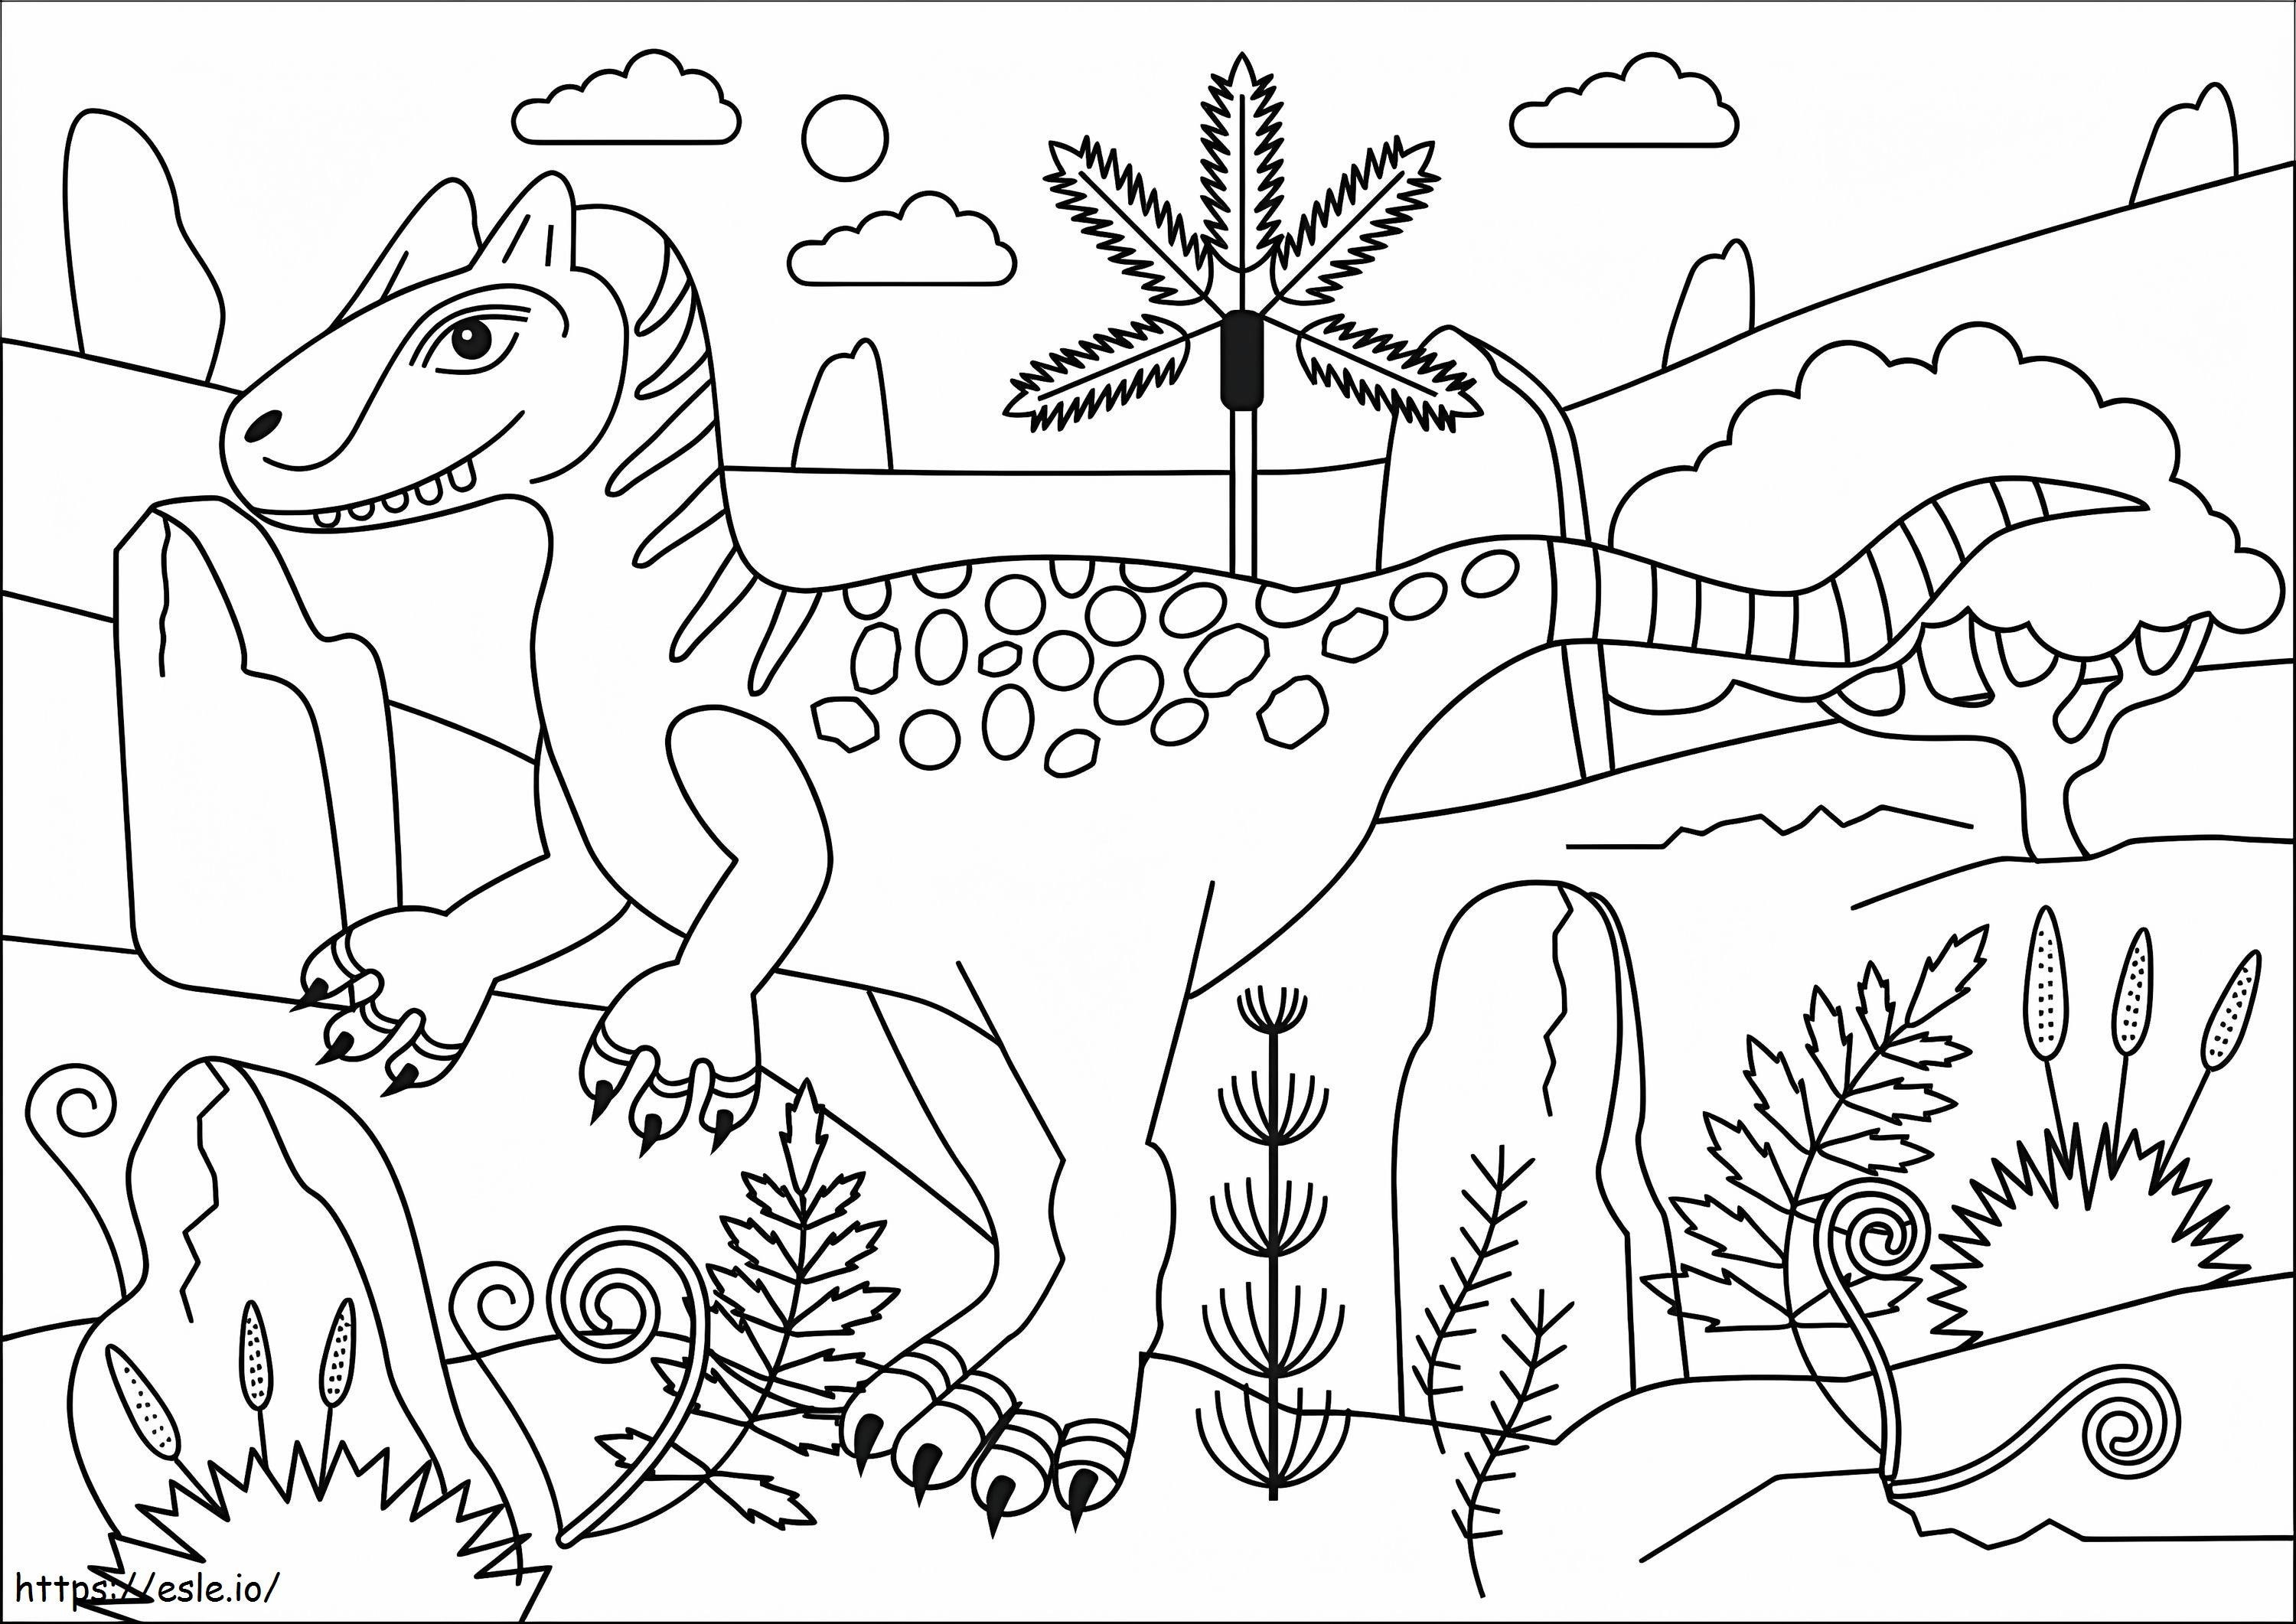 Allosaurus Dinosaur coloring page